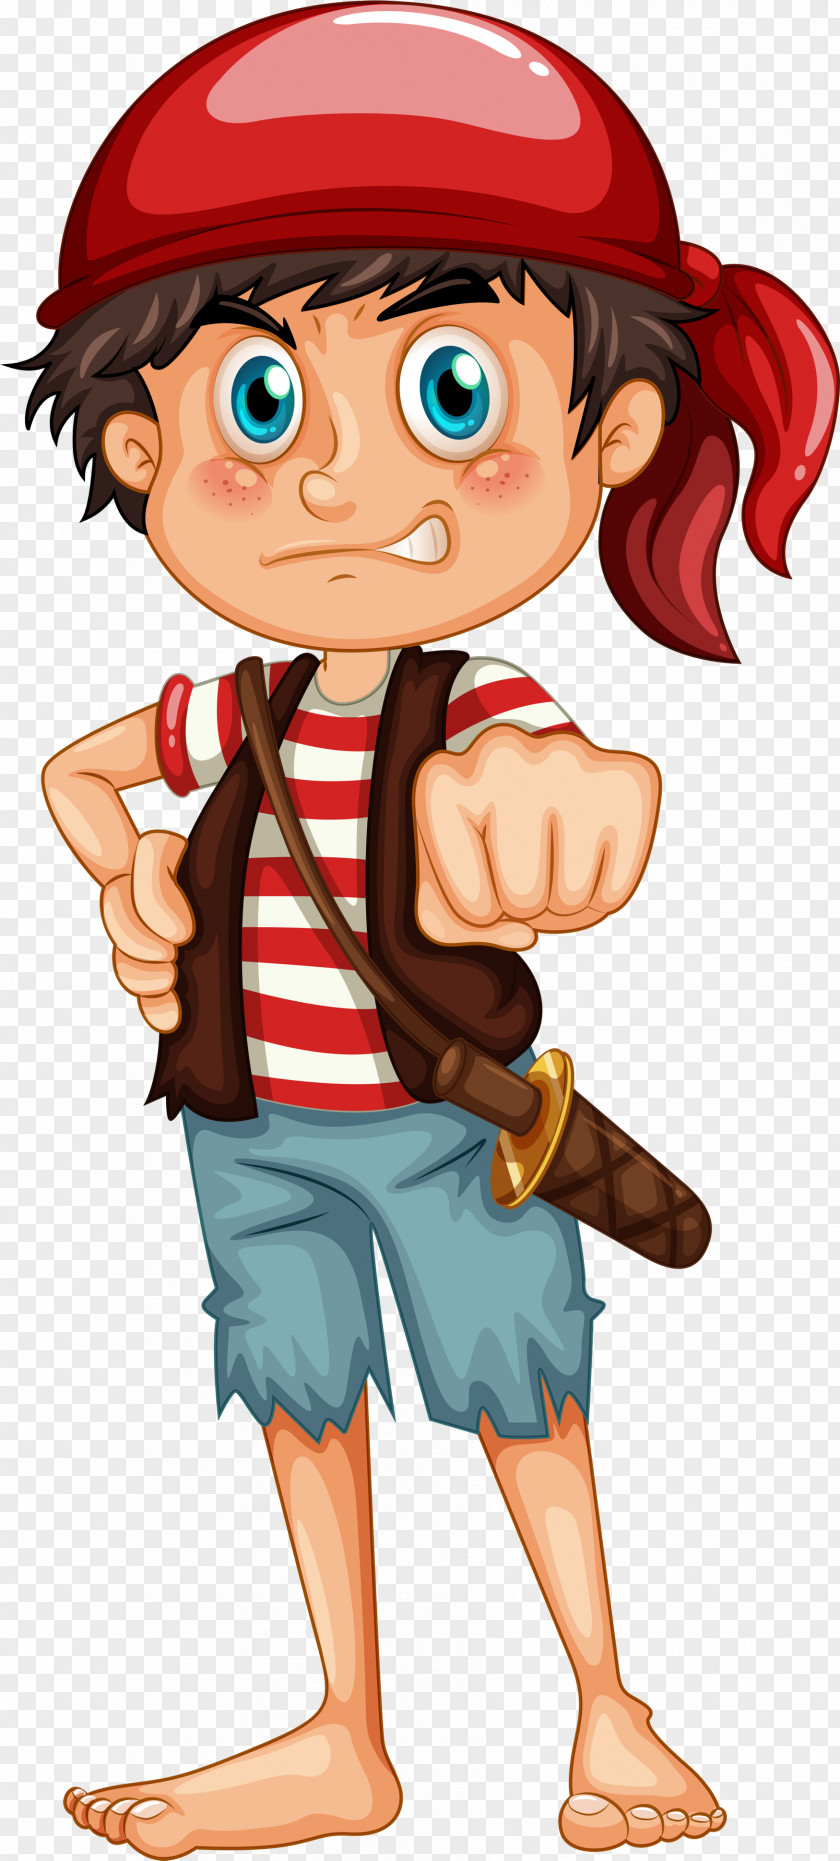 Cartoon Pirates Piracy Crew Illustration PNG